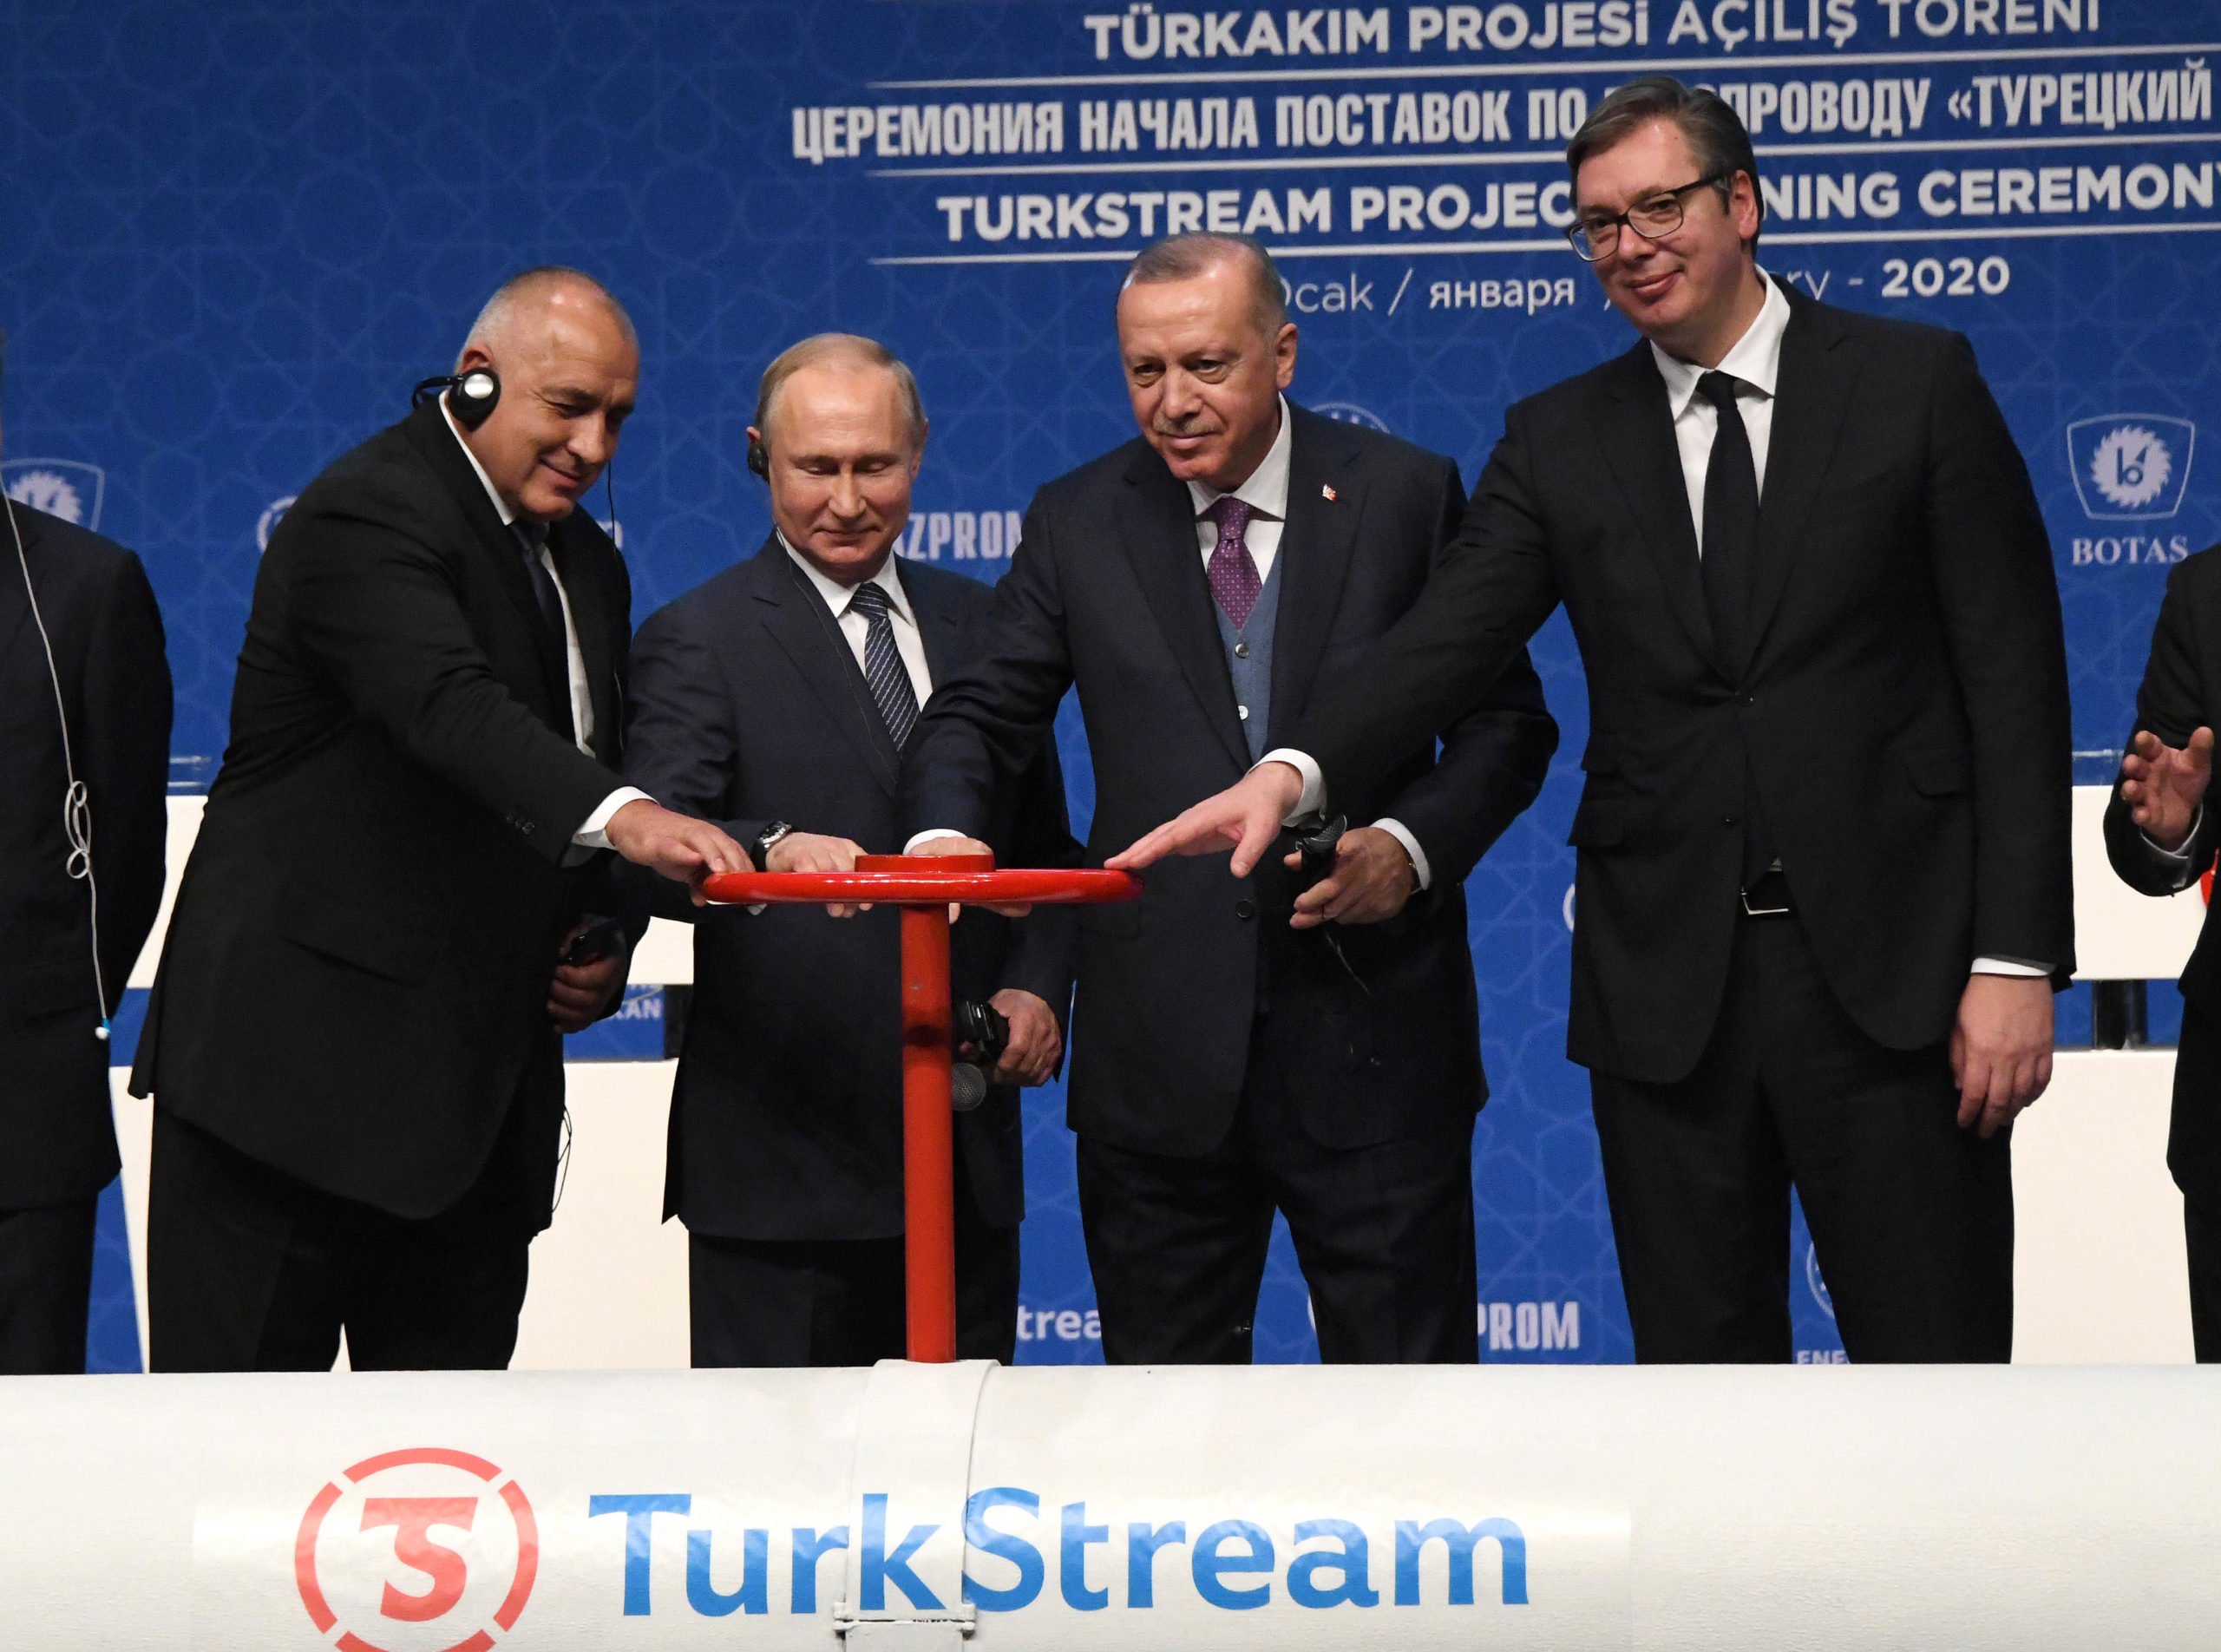 Turkstream - Libia - Putin - Erdogan